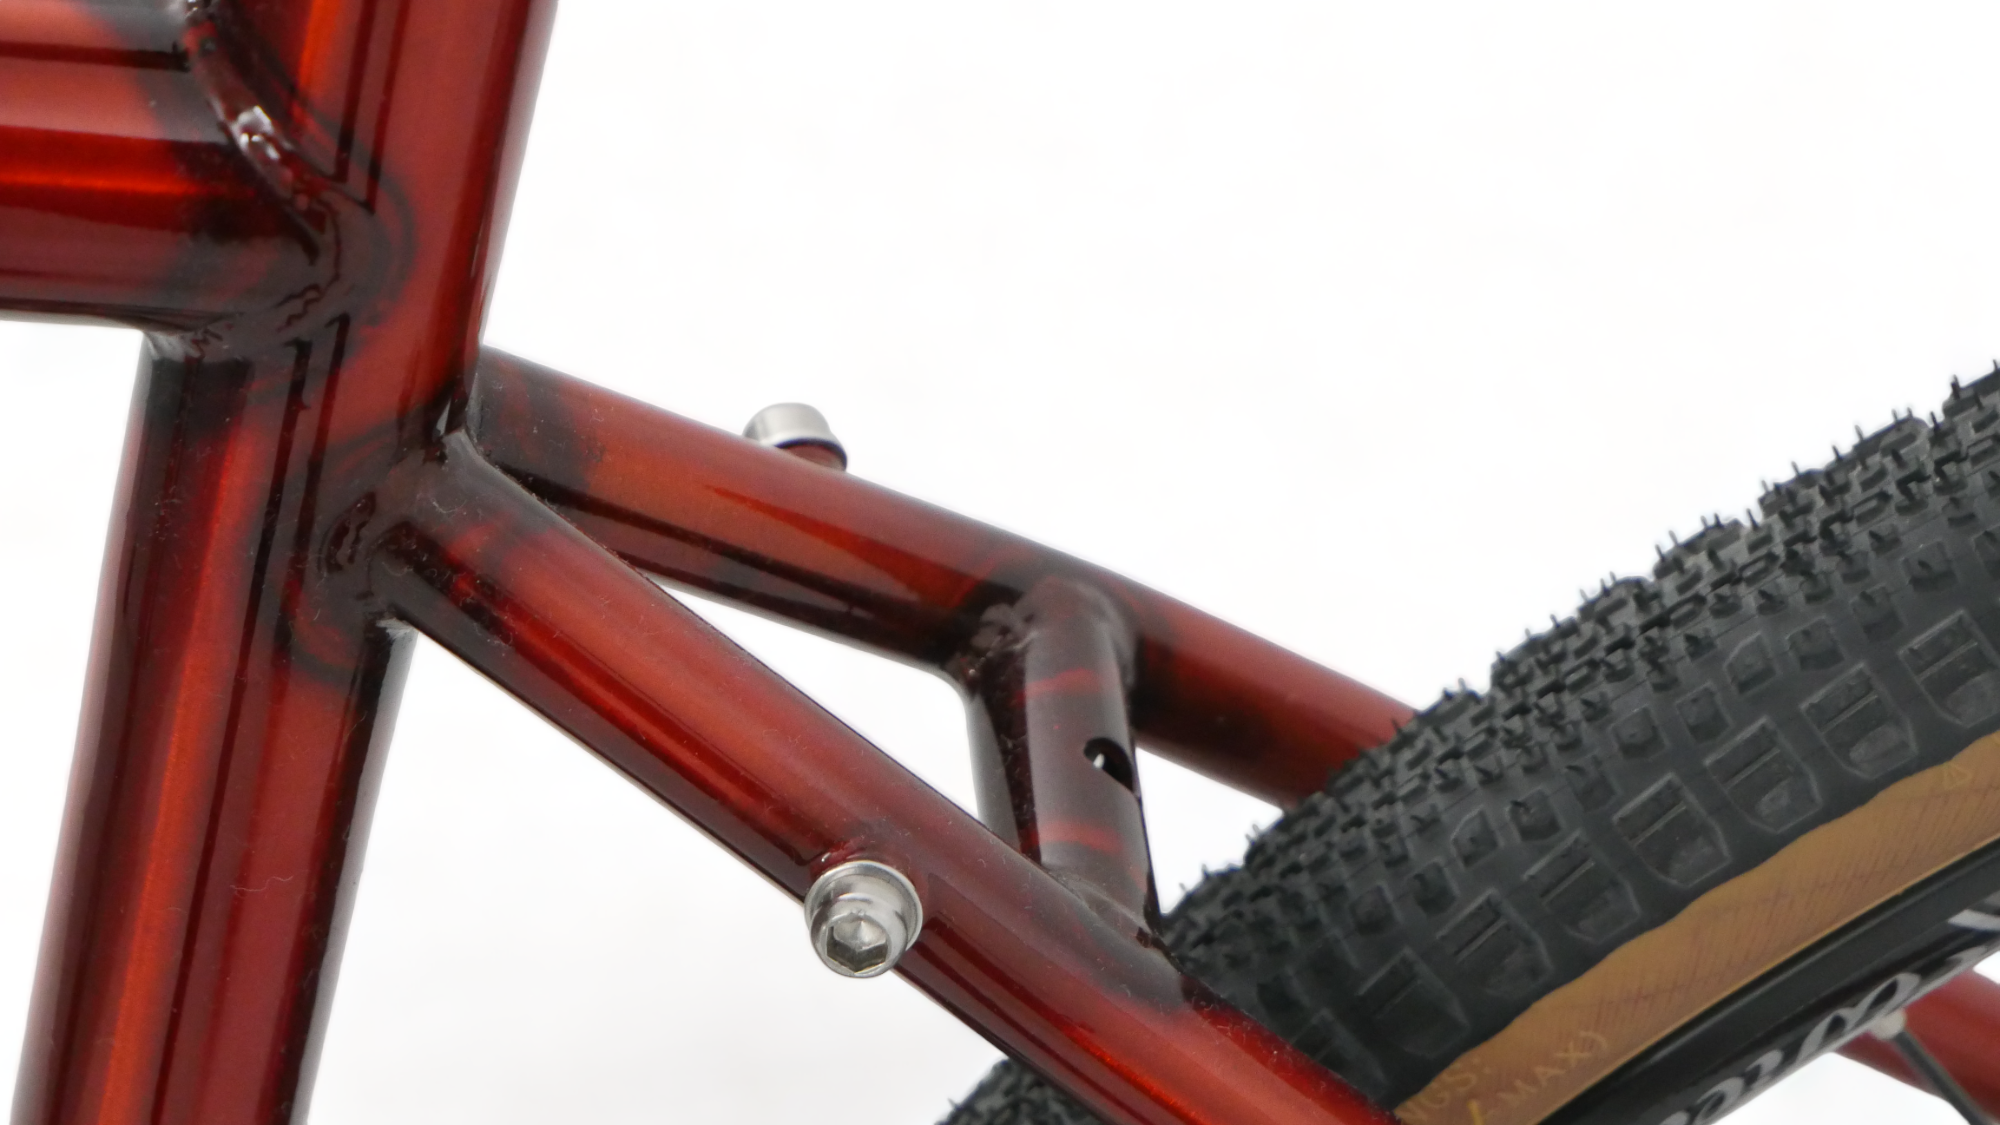 Gravel Bike Wilier-Triestina Jaroon Shimano 105 Cuivre